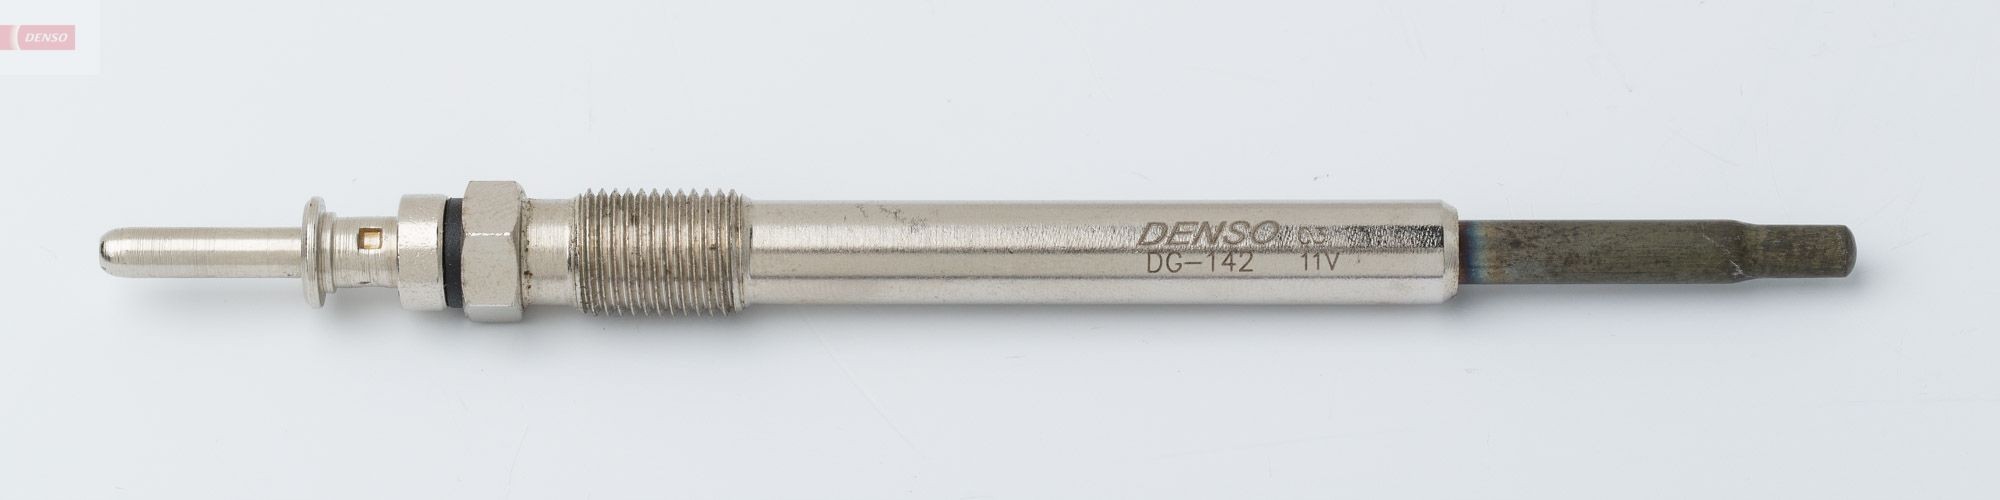 DENSO DG-142 Glow plug 11V M10x1.0, Metal glow plug, 135 mm, 10 Nm